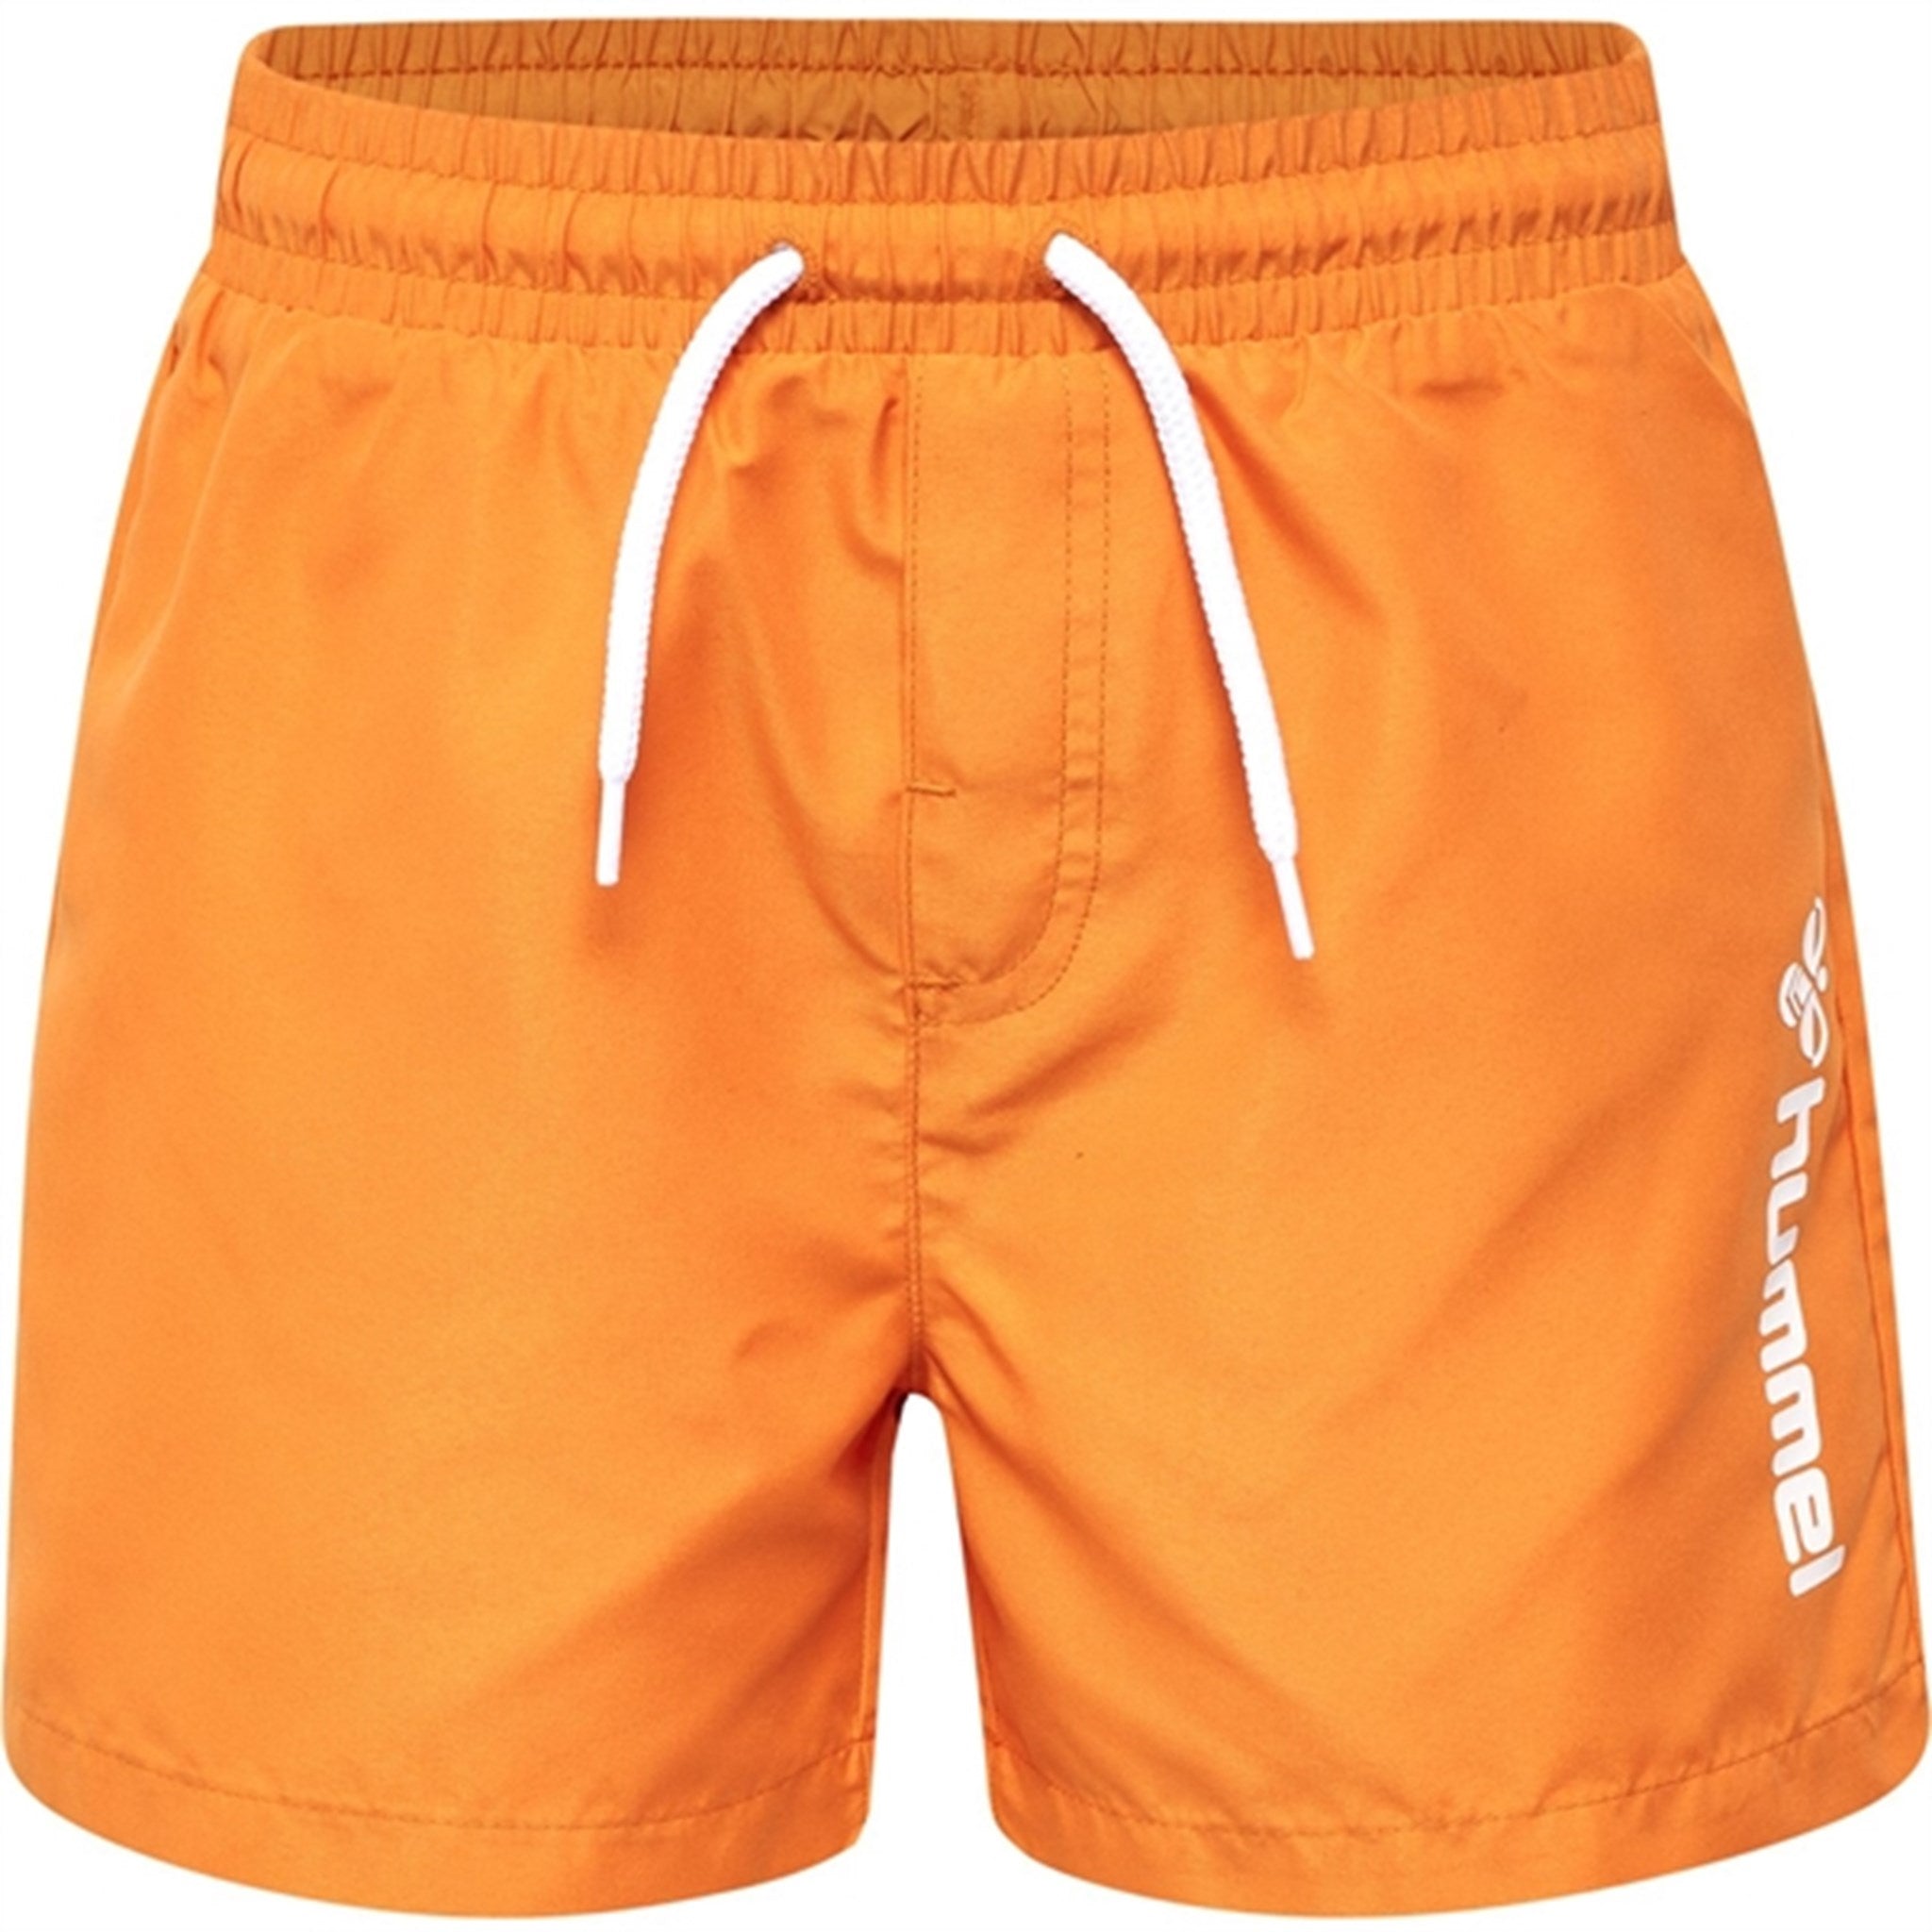 Hummel Bondi Swim Shorts Persimmon Orange